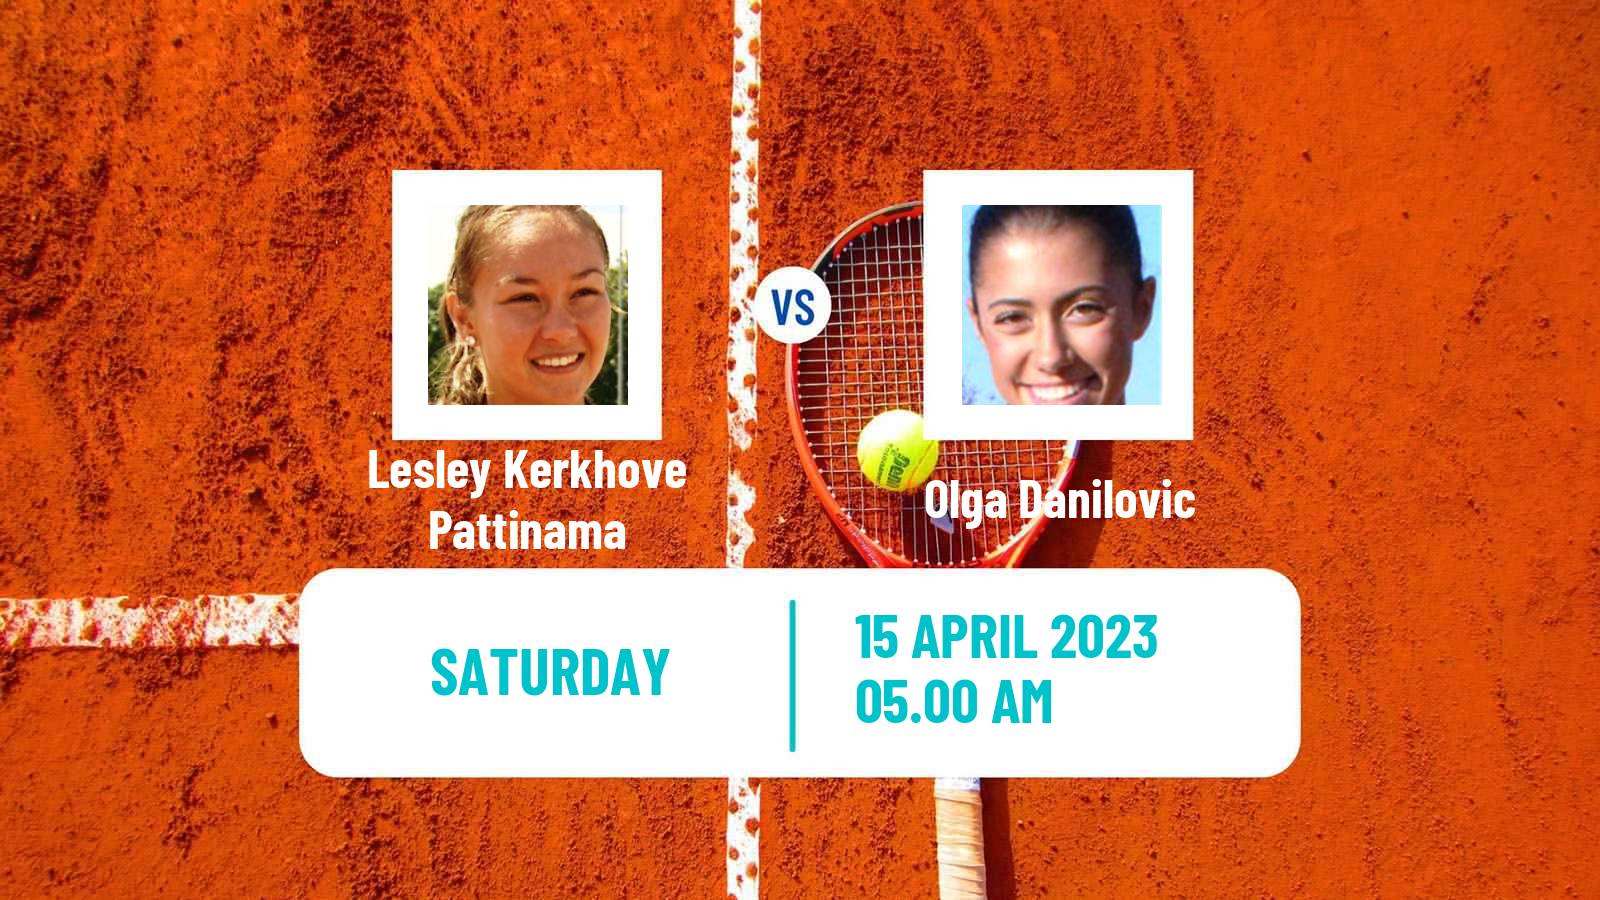 Tennis WTA Billie Jean King Cup Group I Lesley Kerkhove Pattinama - Olga Danilovic